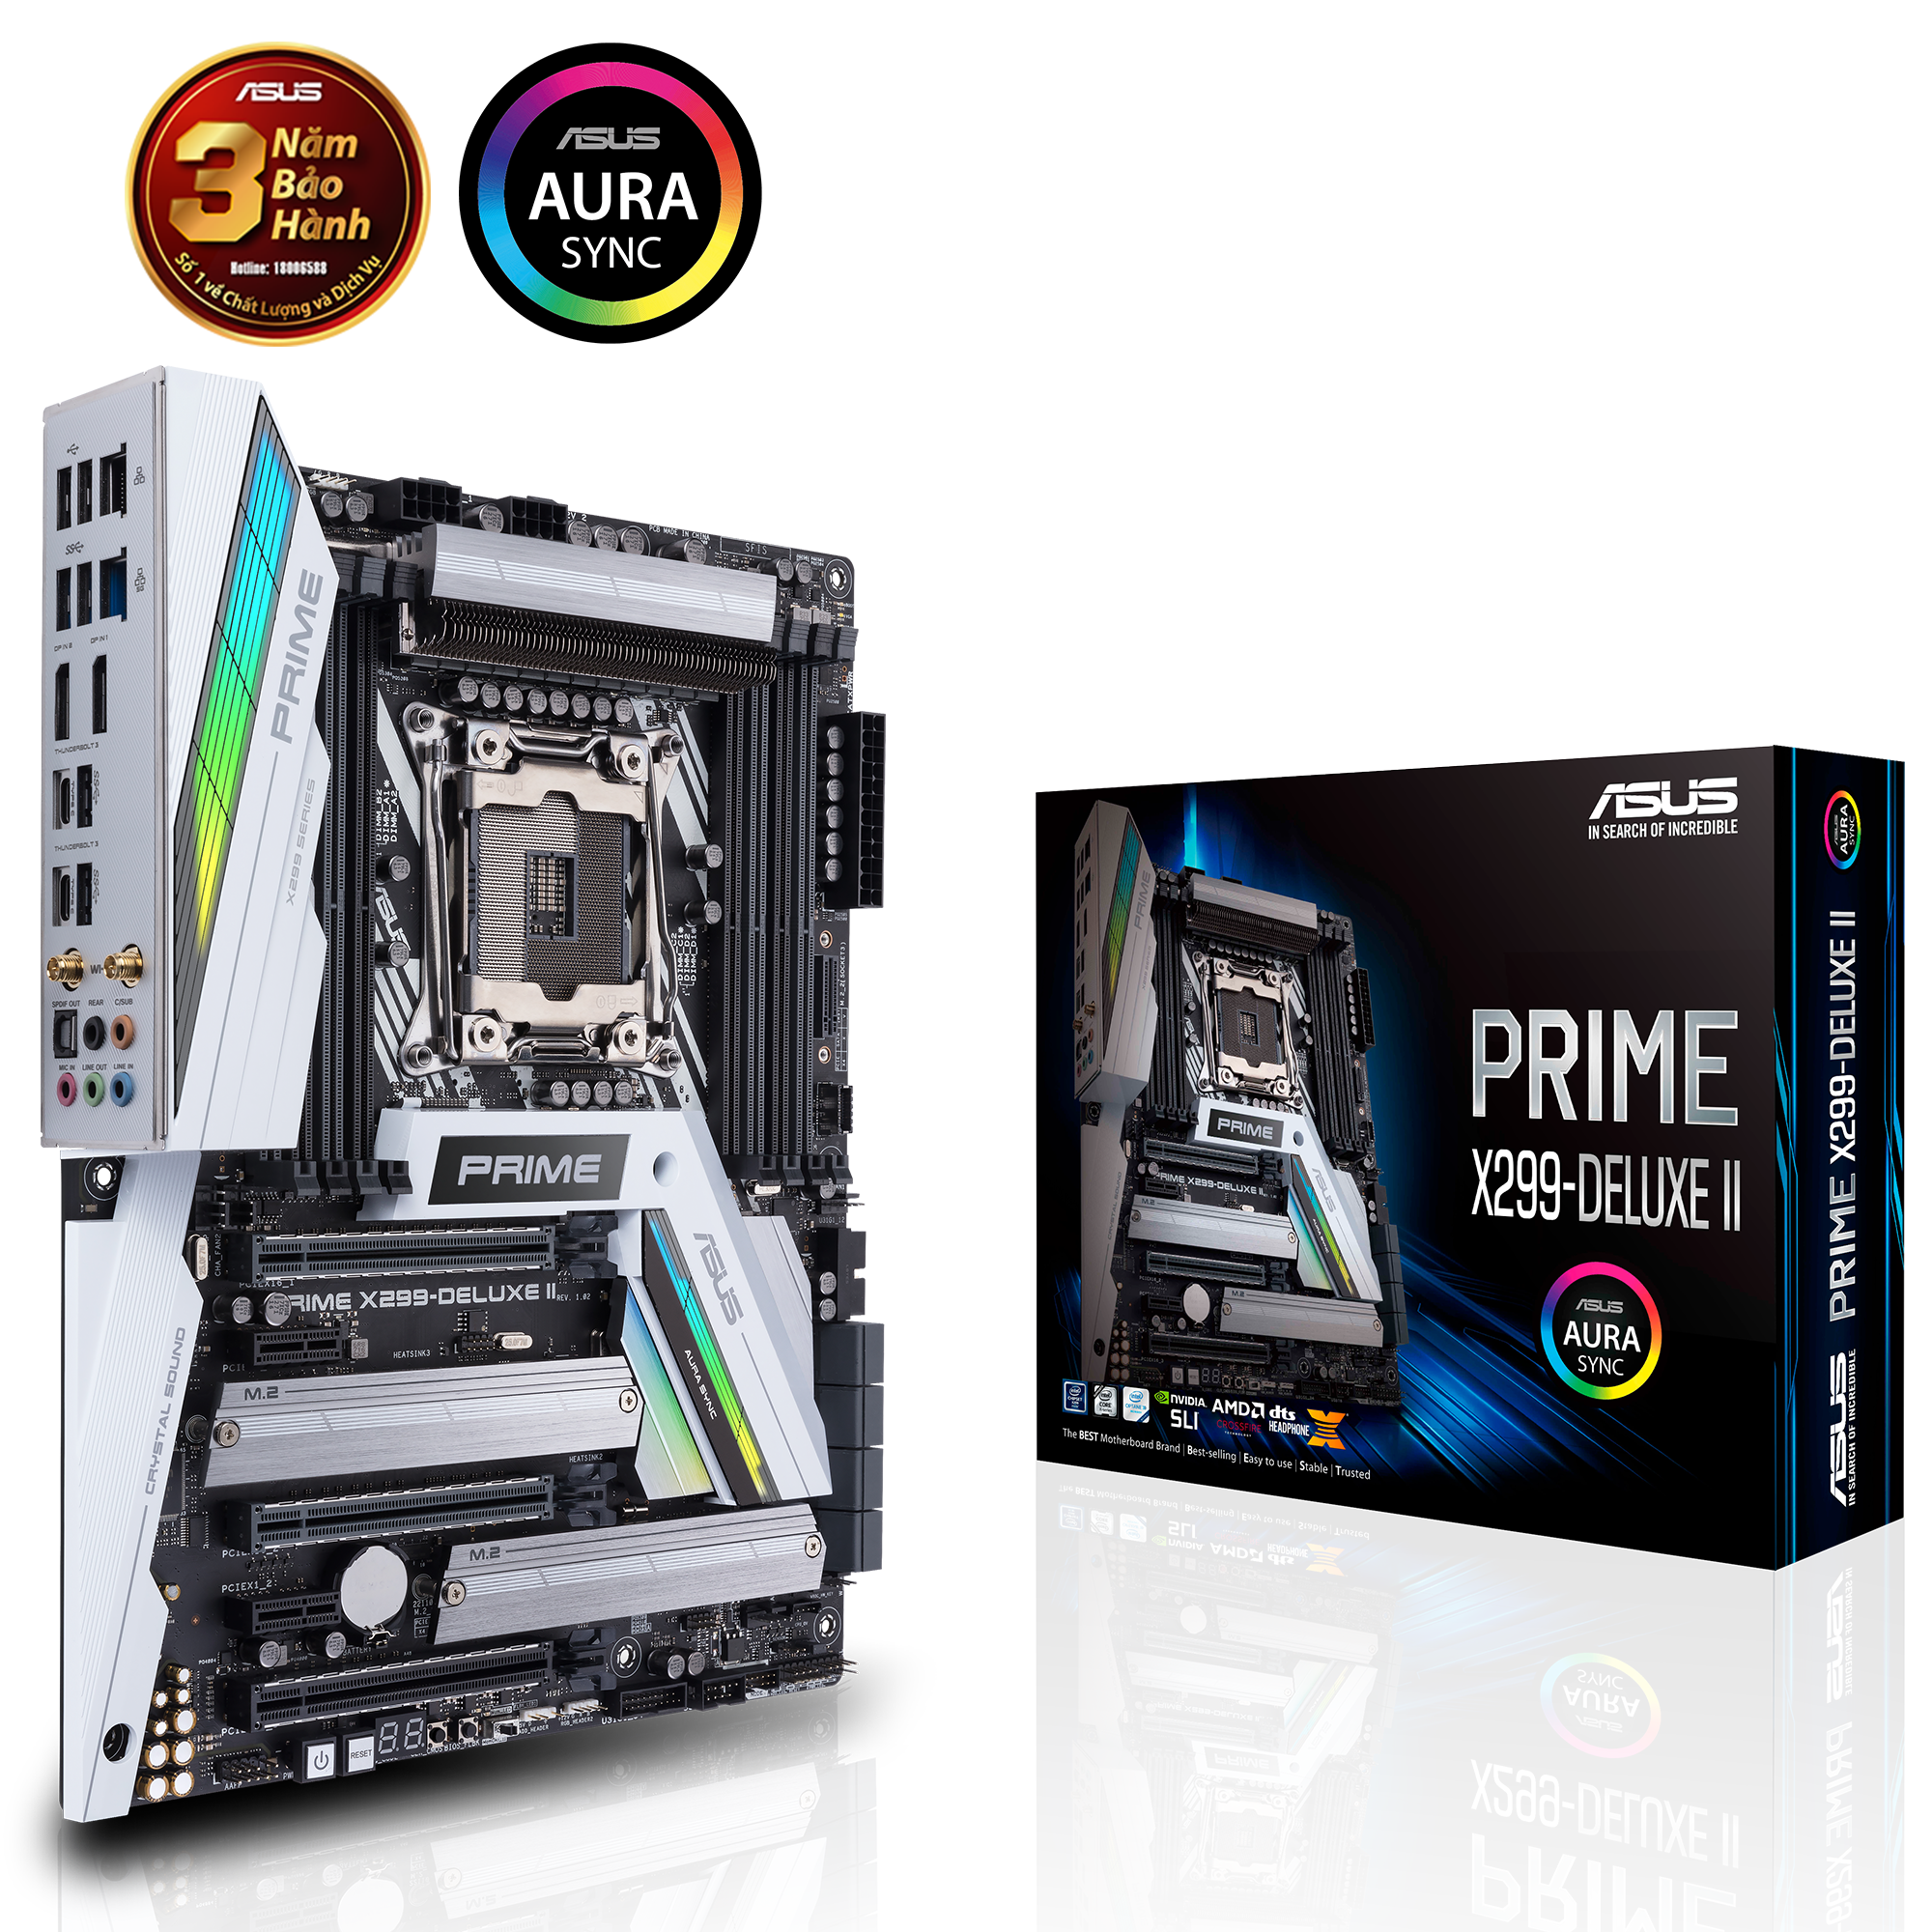 Mainboard Asus PRIME X299-DELUXE II (Intel LGA 2066, ATX, 8 khe RAM DDR4)